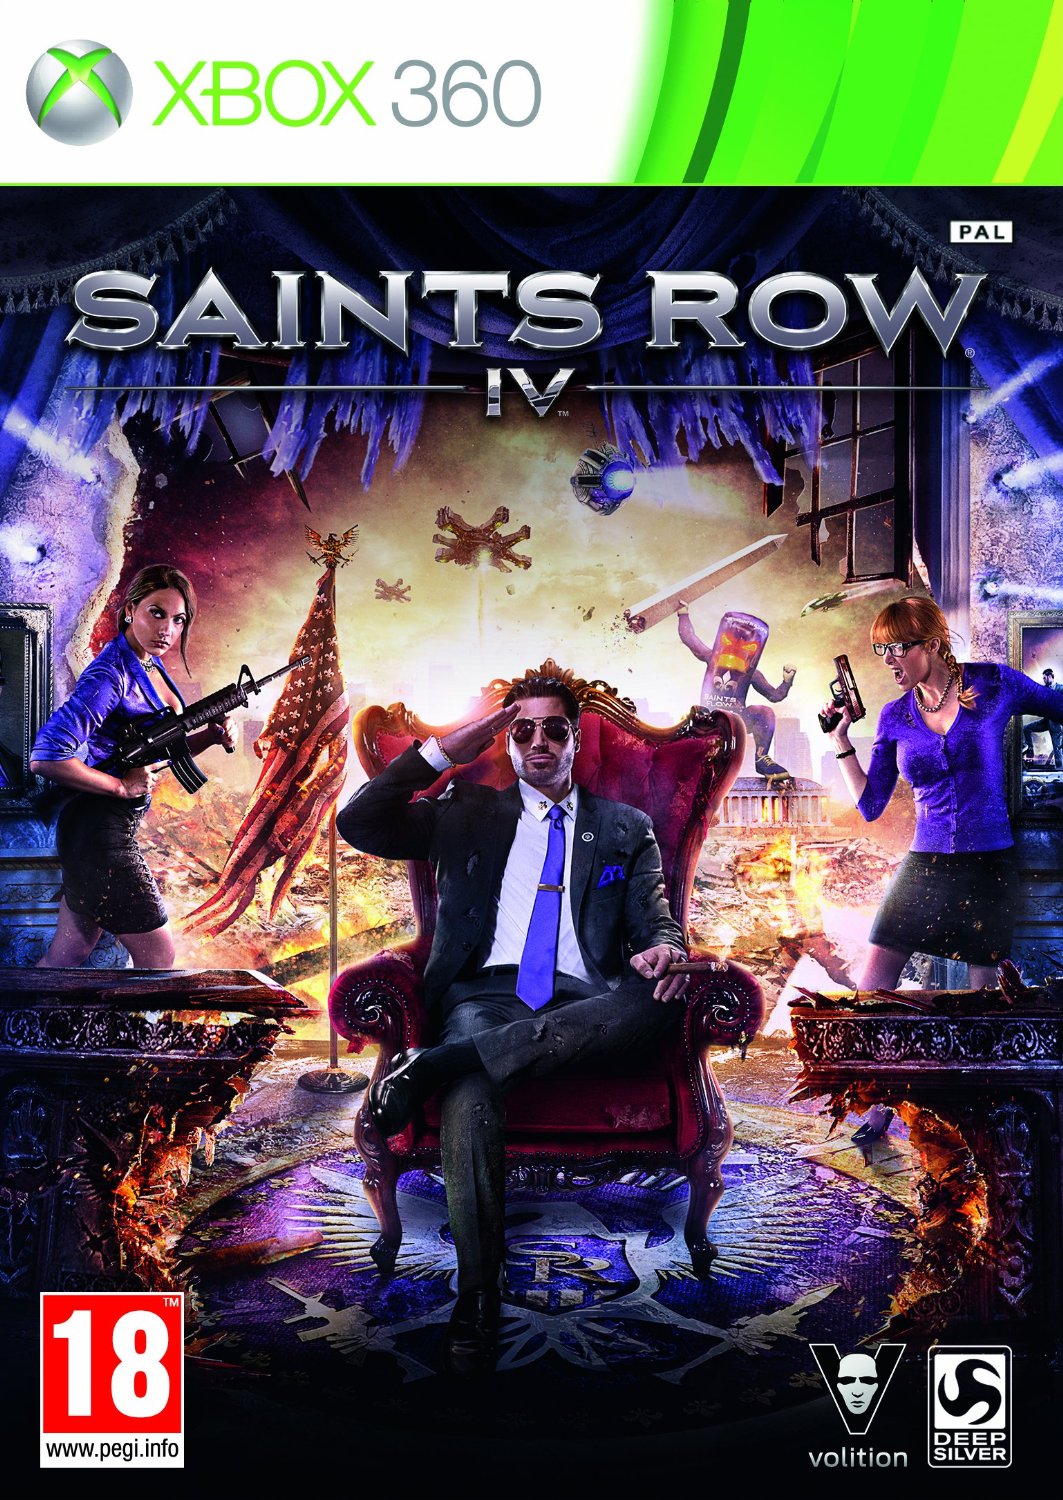 Xbox360: Saints Row IV